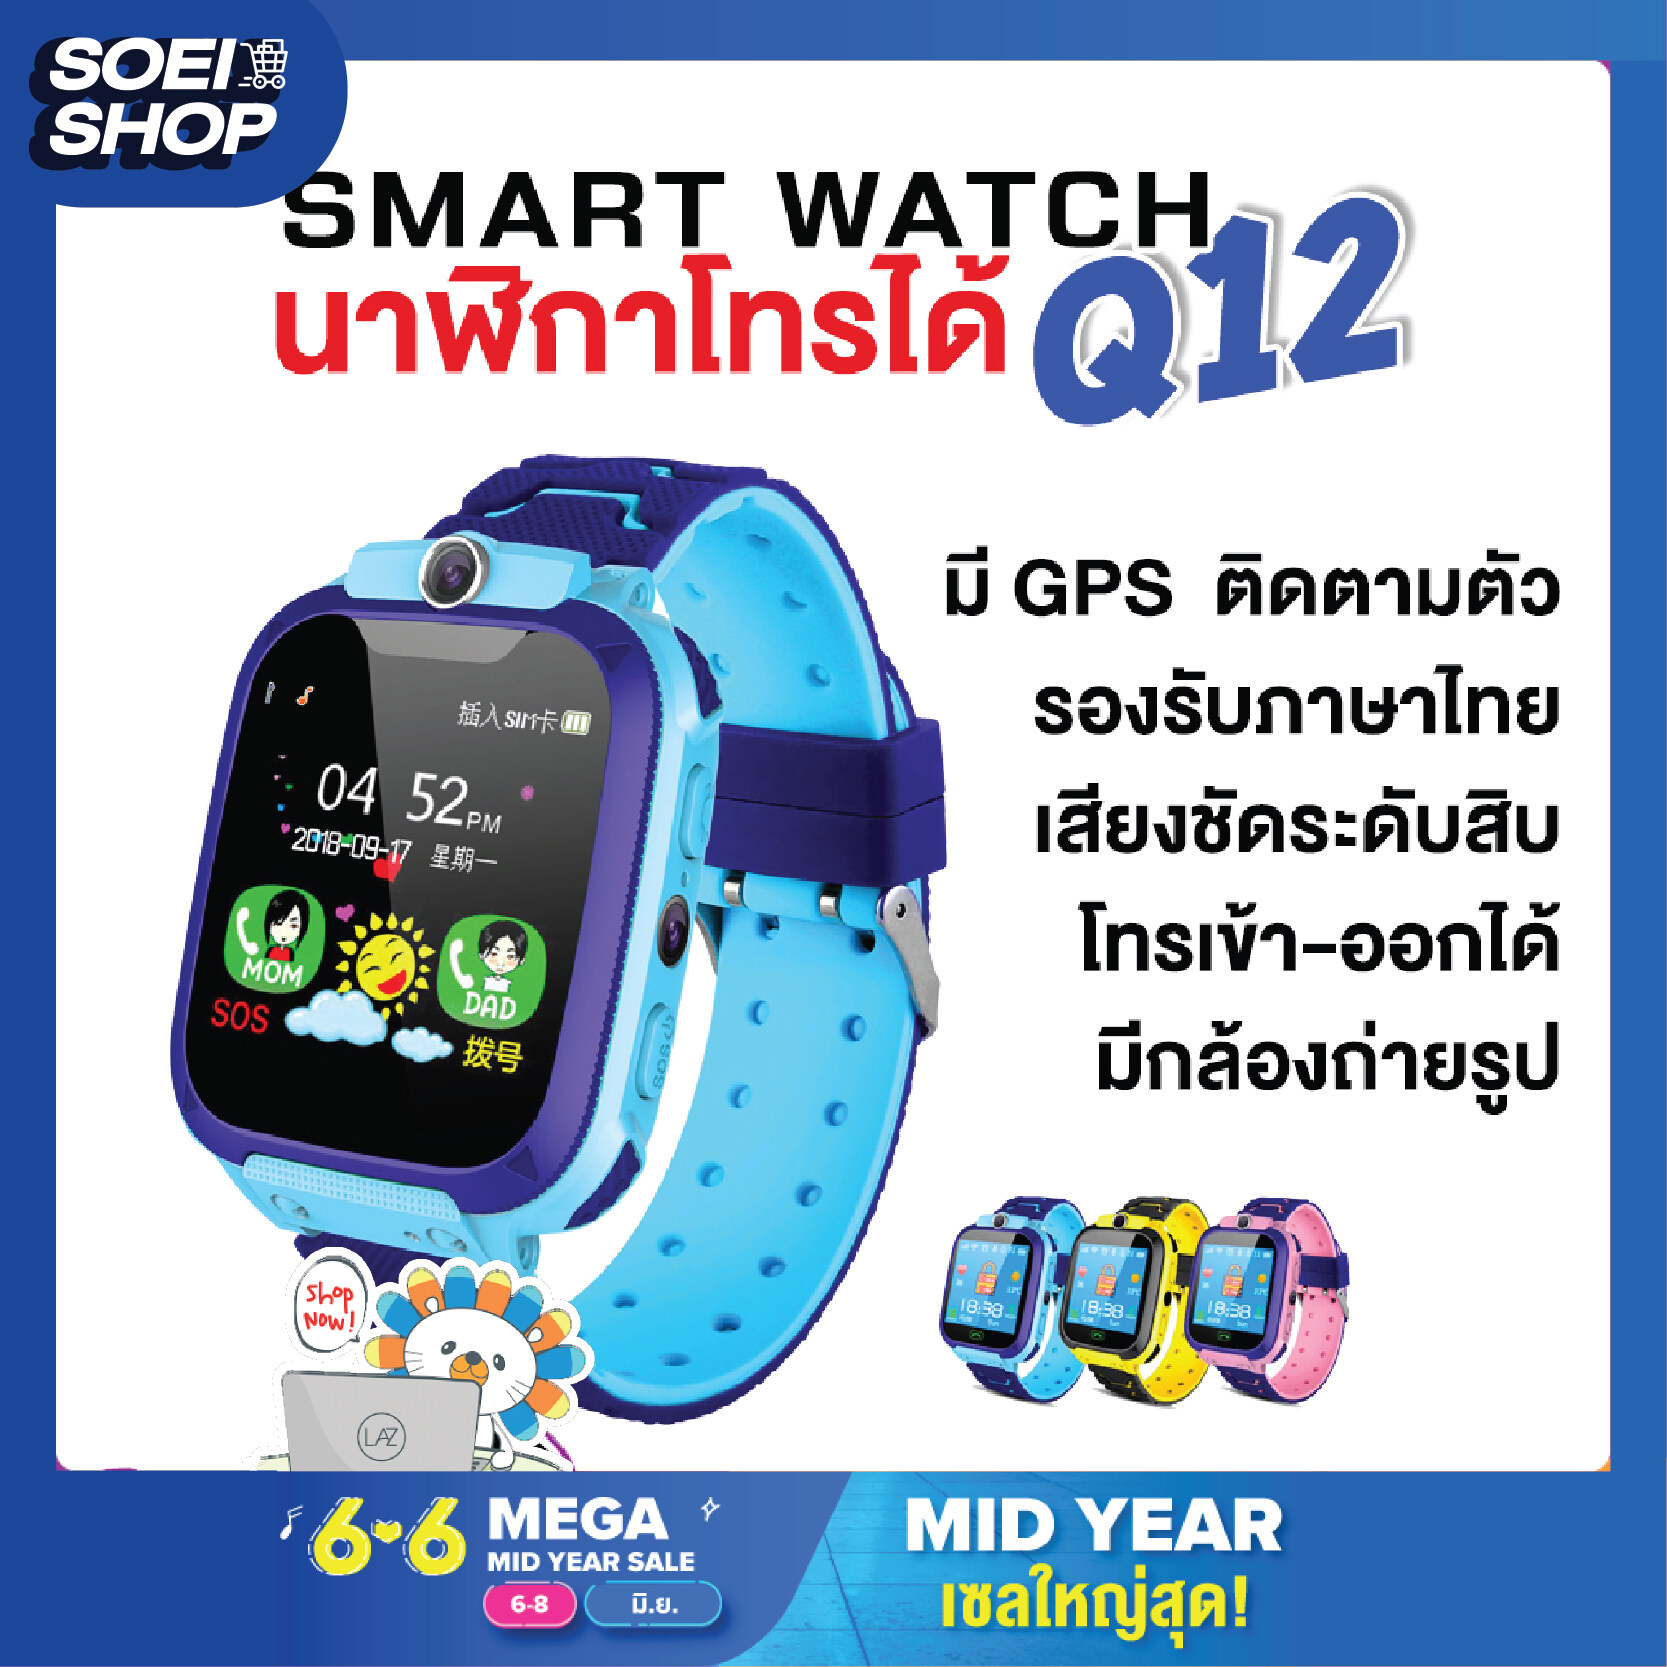 [SOEI SHOP] ราคาพิเศษ! นาฬิกา Q12/Q12B ใส่ซิมได้ นาฬิกาเด็ก นาฬิกาข้อมือเด็ก smart watch Q12 สมาร์ทวอท์ชสำรับเด็ก นาฬิกาอัจฉริยะ ป้องกันเด็กหาย ติดตามGPSได้ สมารทวอช กันน้ำ IP67 บลูทูธ มีกล้อง โทรเข้า-ออกได้ นาฬิกาไอโม่ (มีประกัน) รองรับซิม 2G+